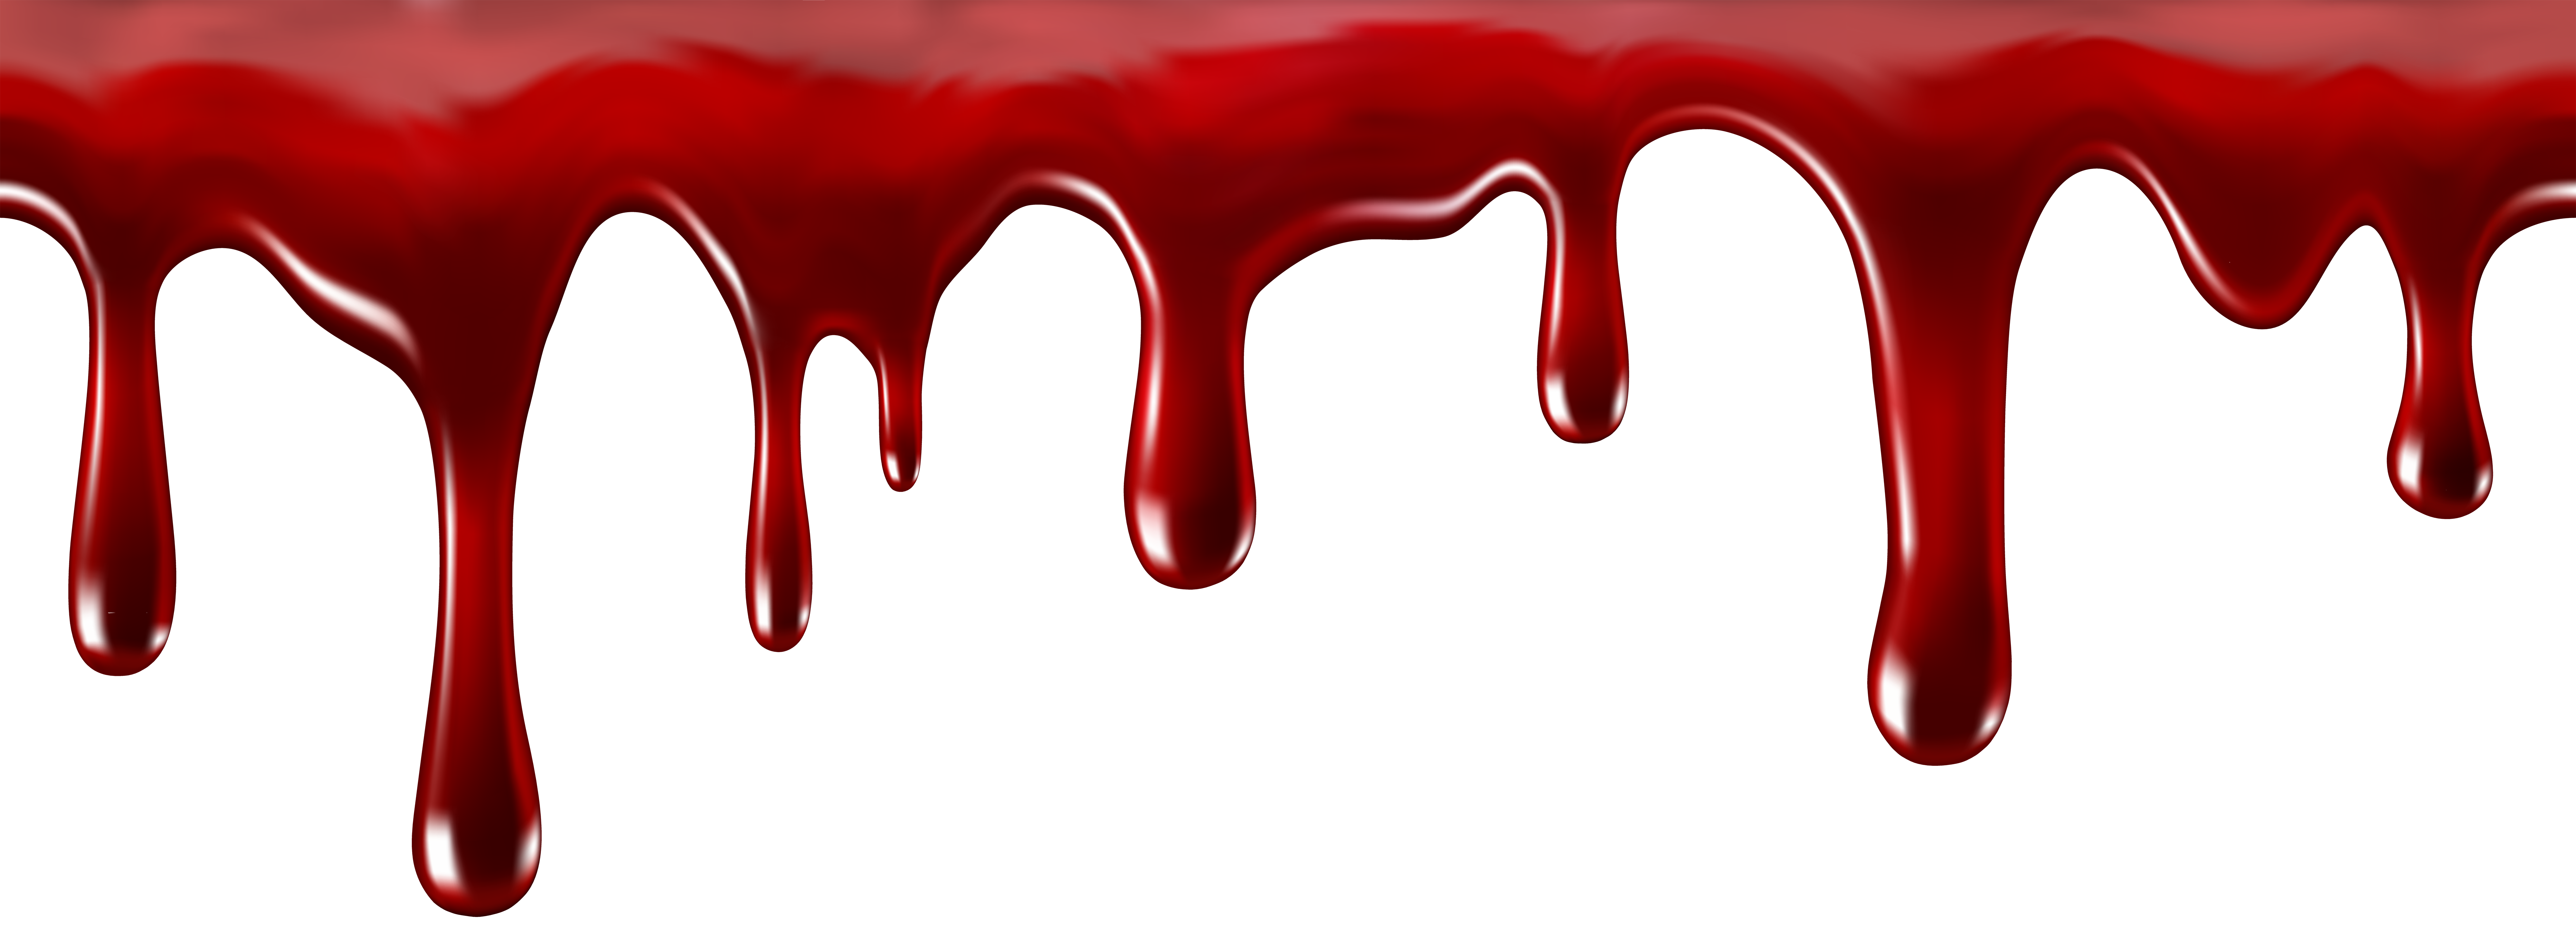 clipart blood - photo #38